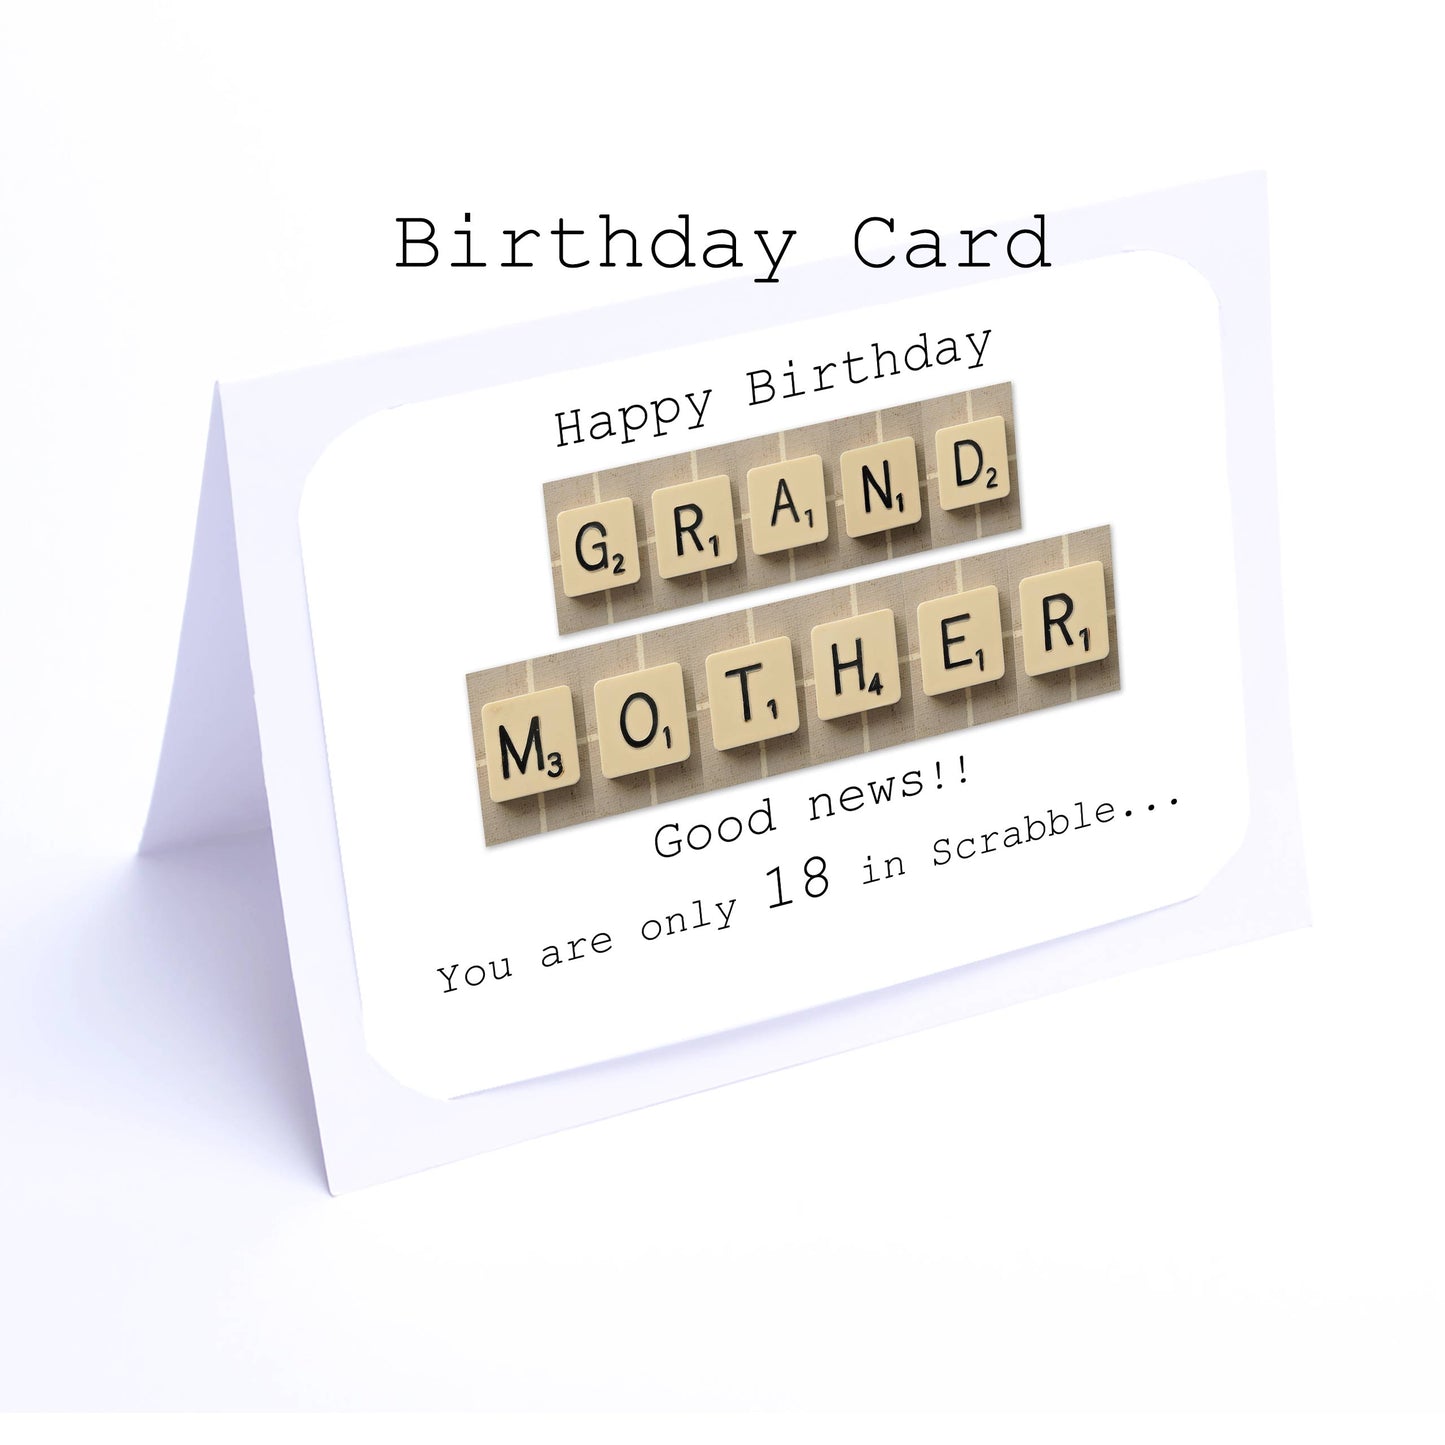 Grandma, Grandparent Birthday Cards